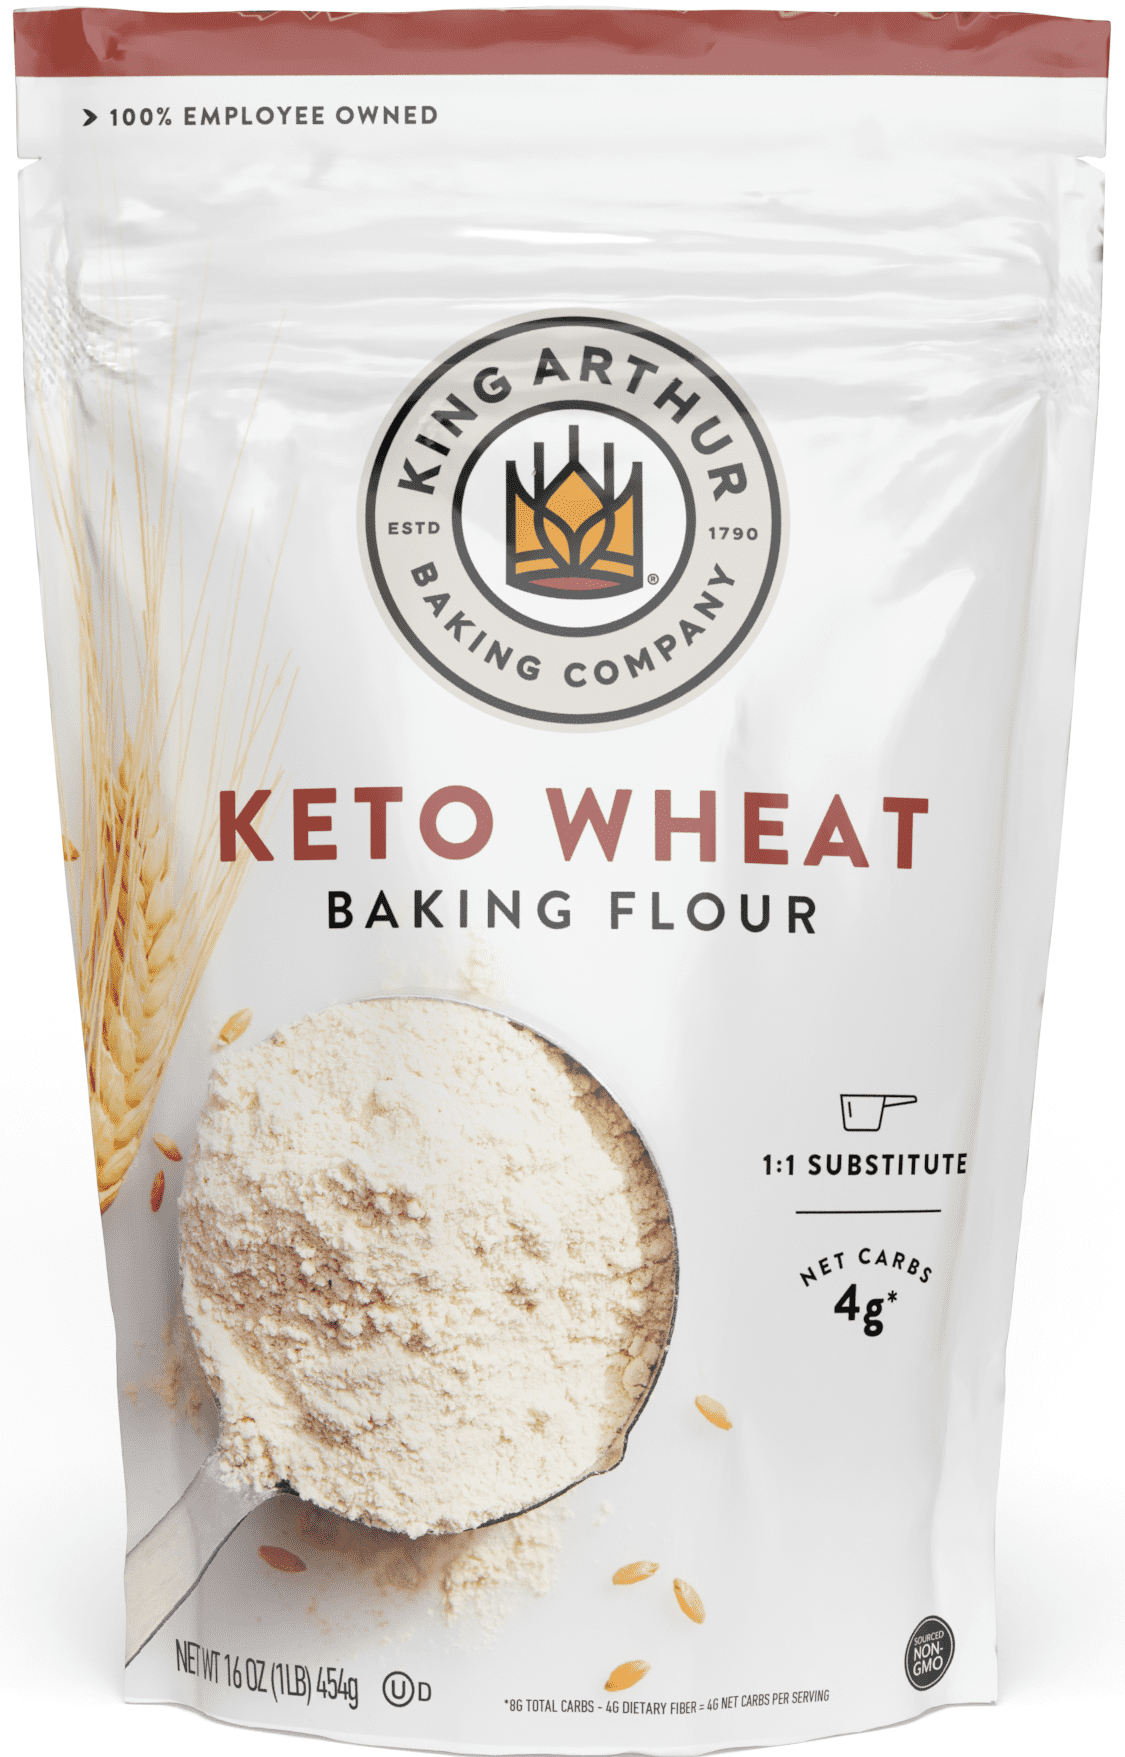 King Arthur Baking Company - Mix Wheat Pza Crust Keto - Case of 8